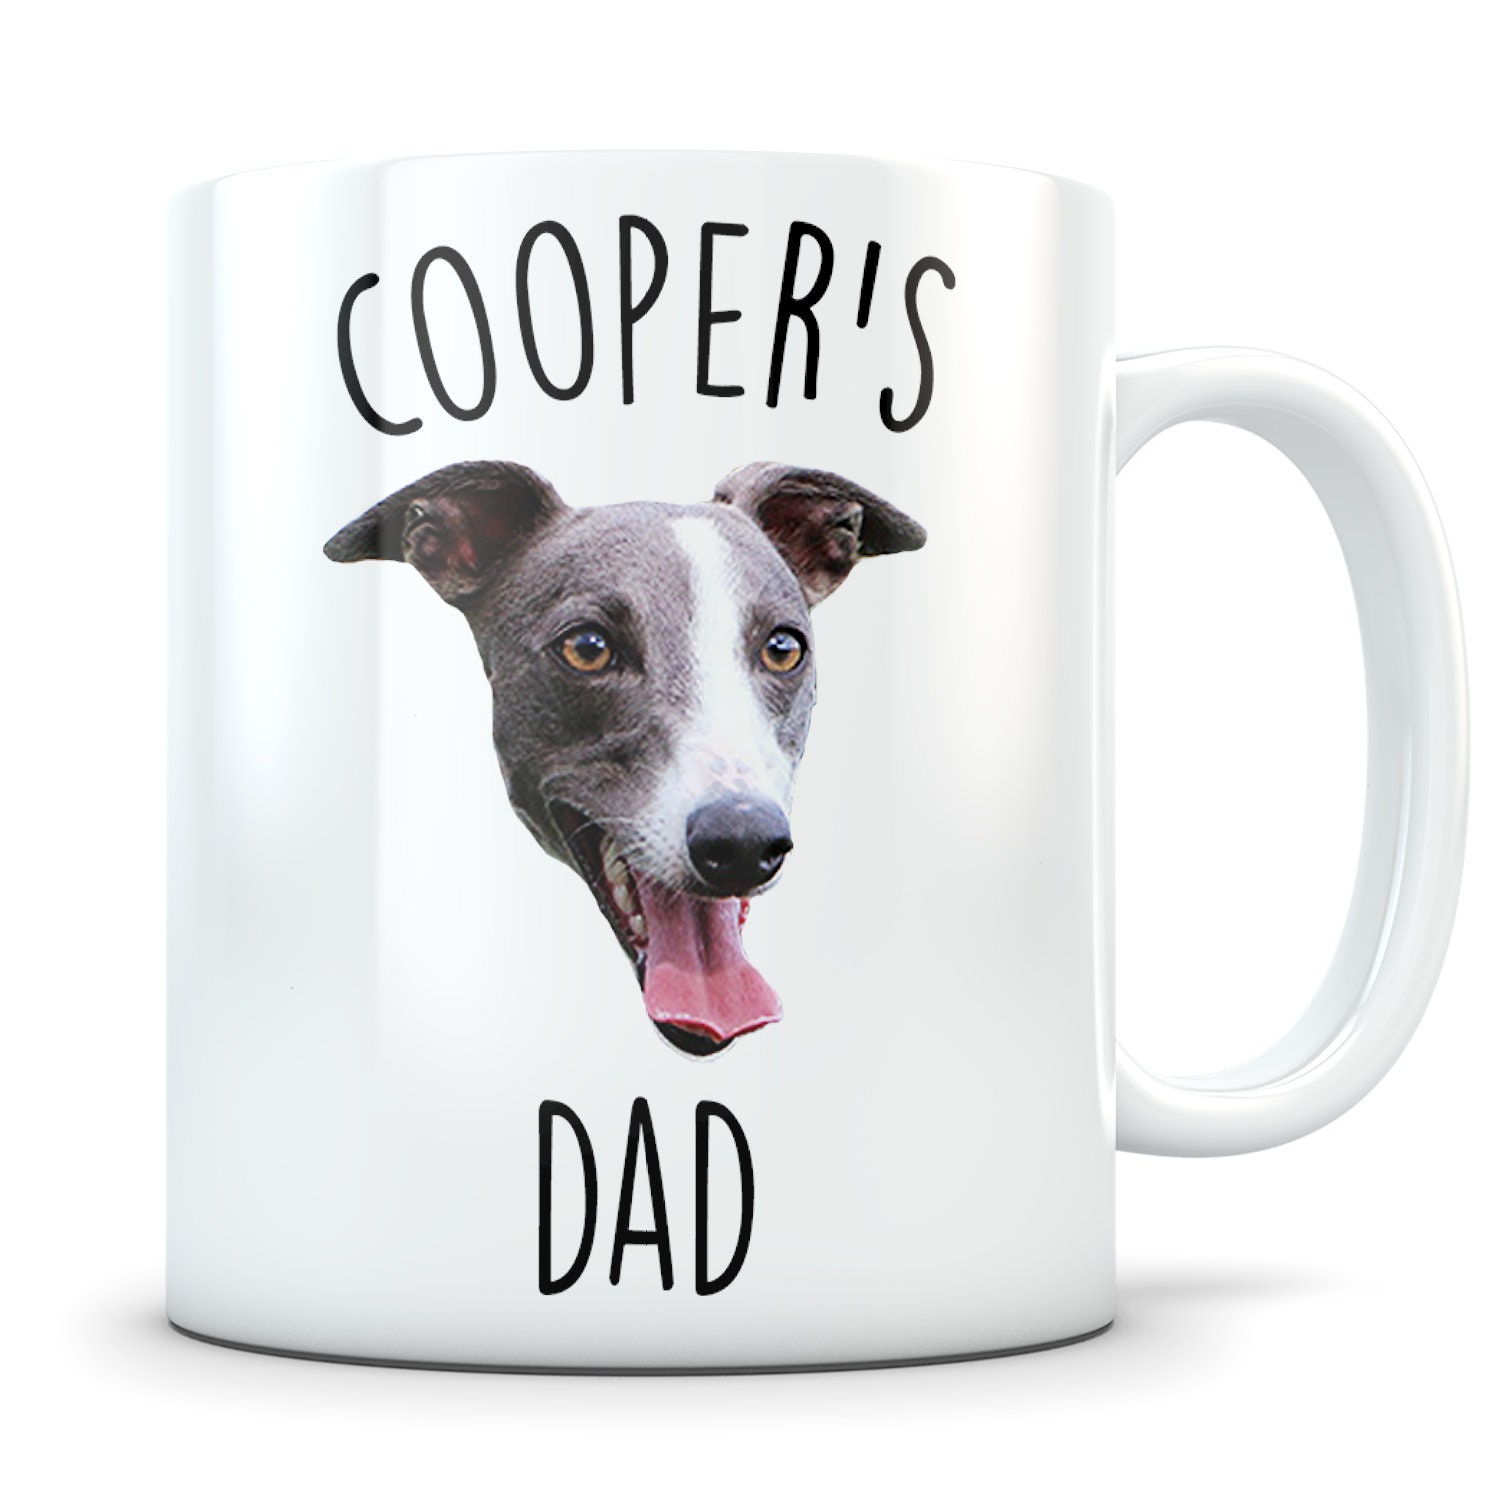 Whippet Dog Mug gift Whippet lover Birthday present cup merchandise tea coffee 